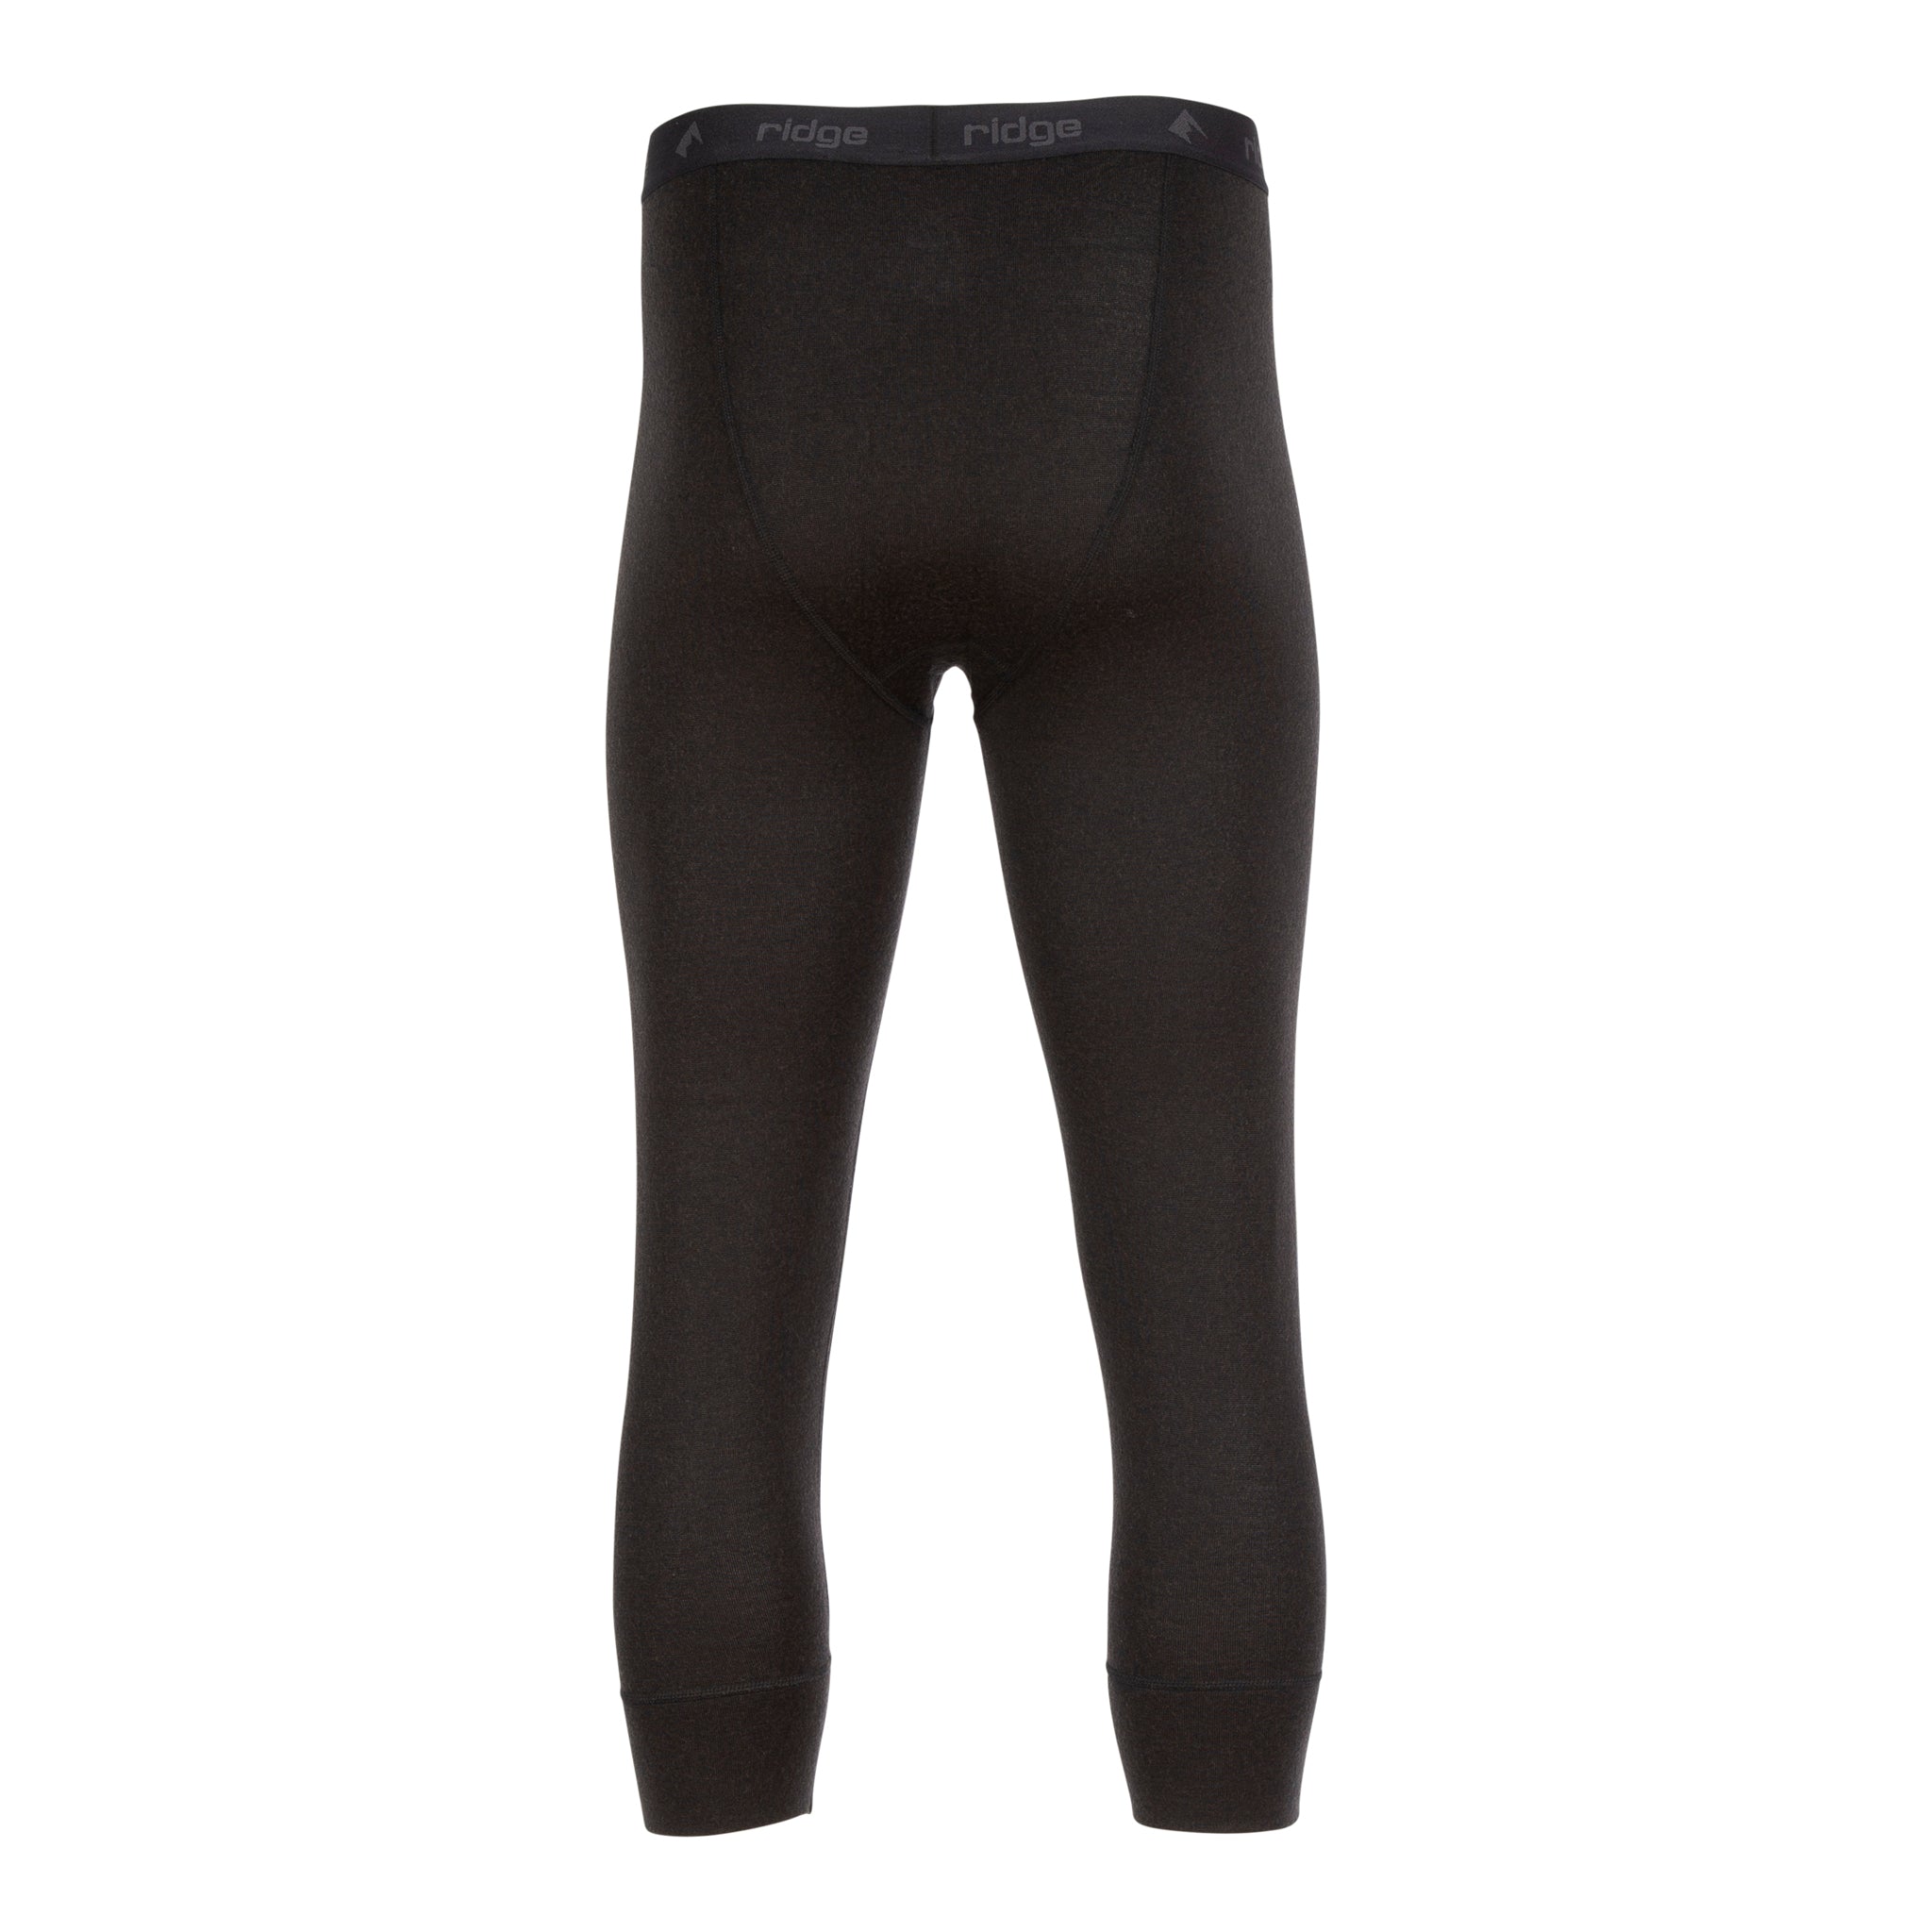 Buy Eizniz Men's 100% Merino Wool Thermal Base Layer Bottom Underwear  Leggings, Black-270g, Medium at